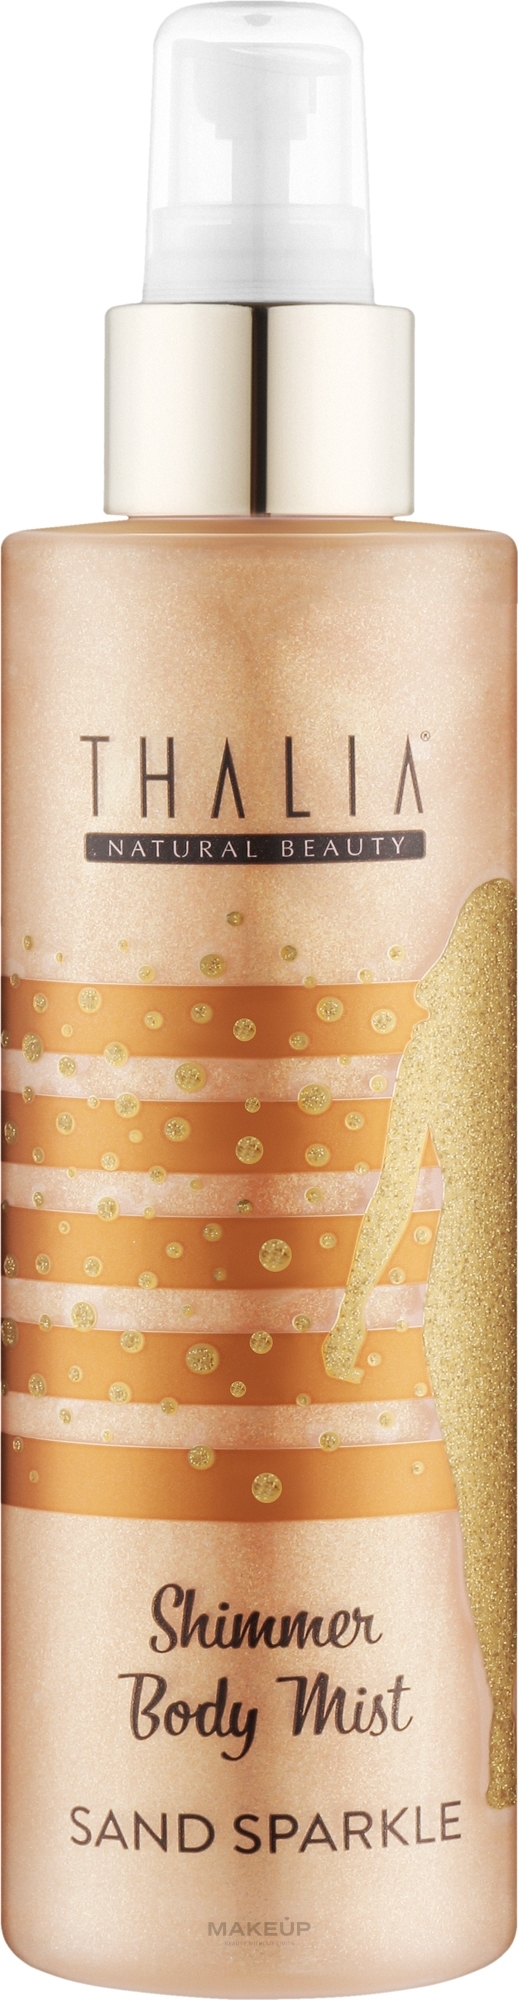 Спрей-шиммер для тела - Thalia Shimmer Body Mist Sand Sparkle  — фото 200ml